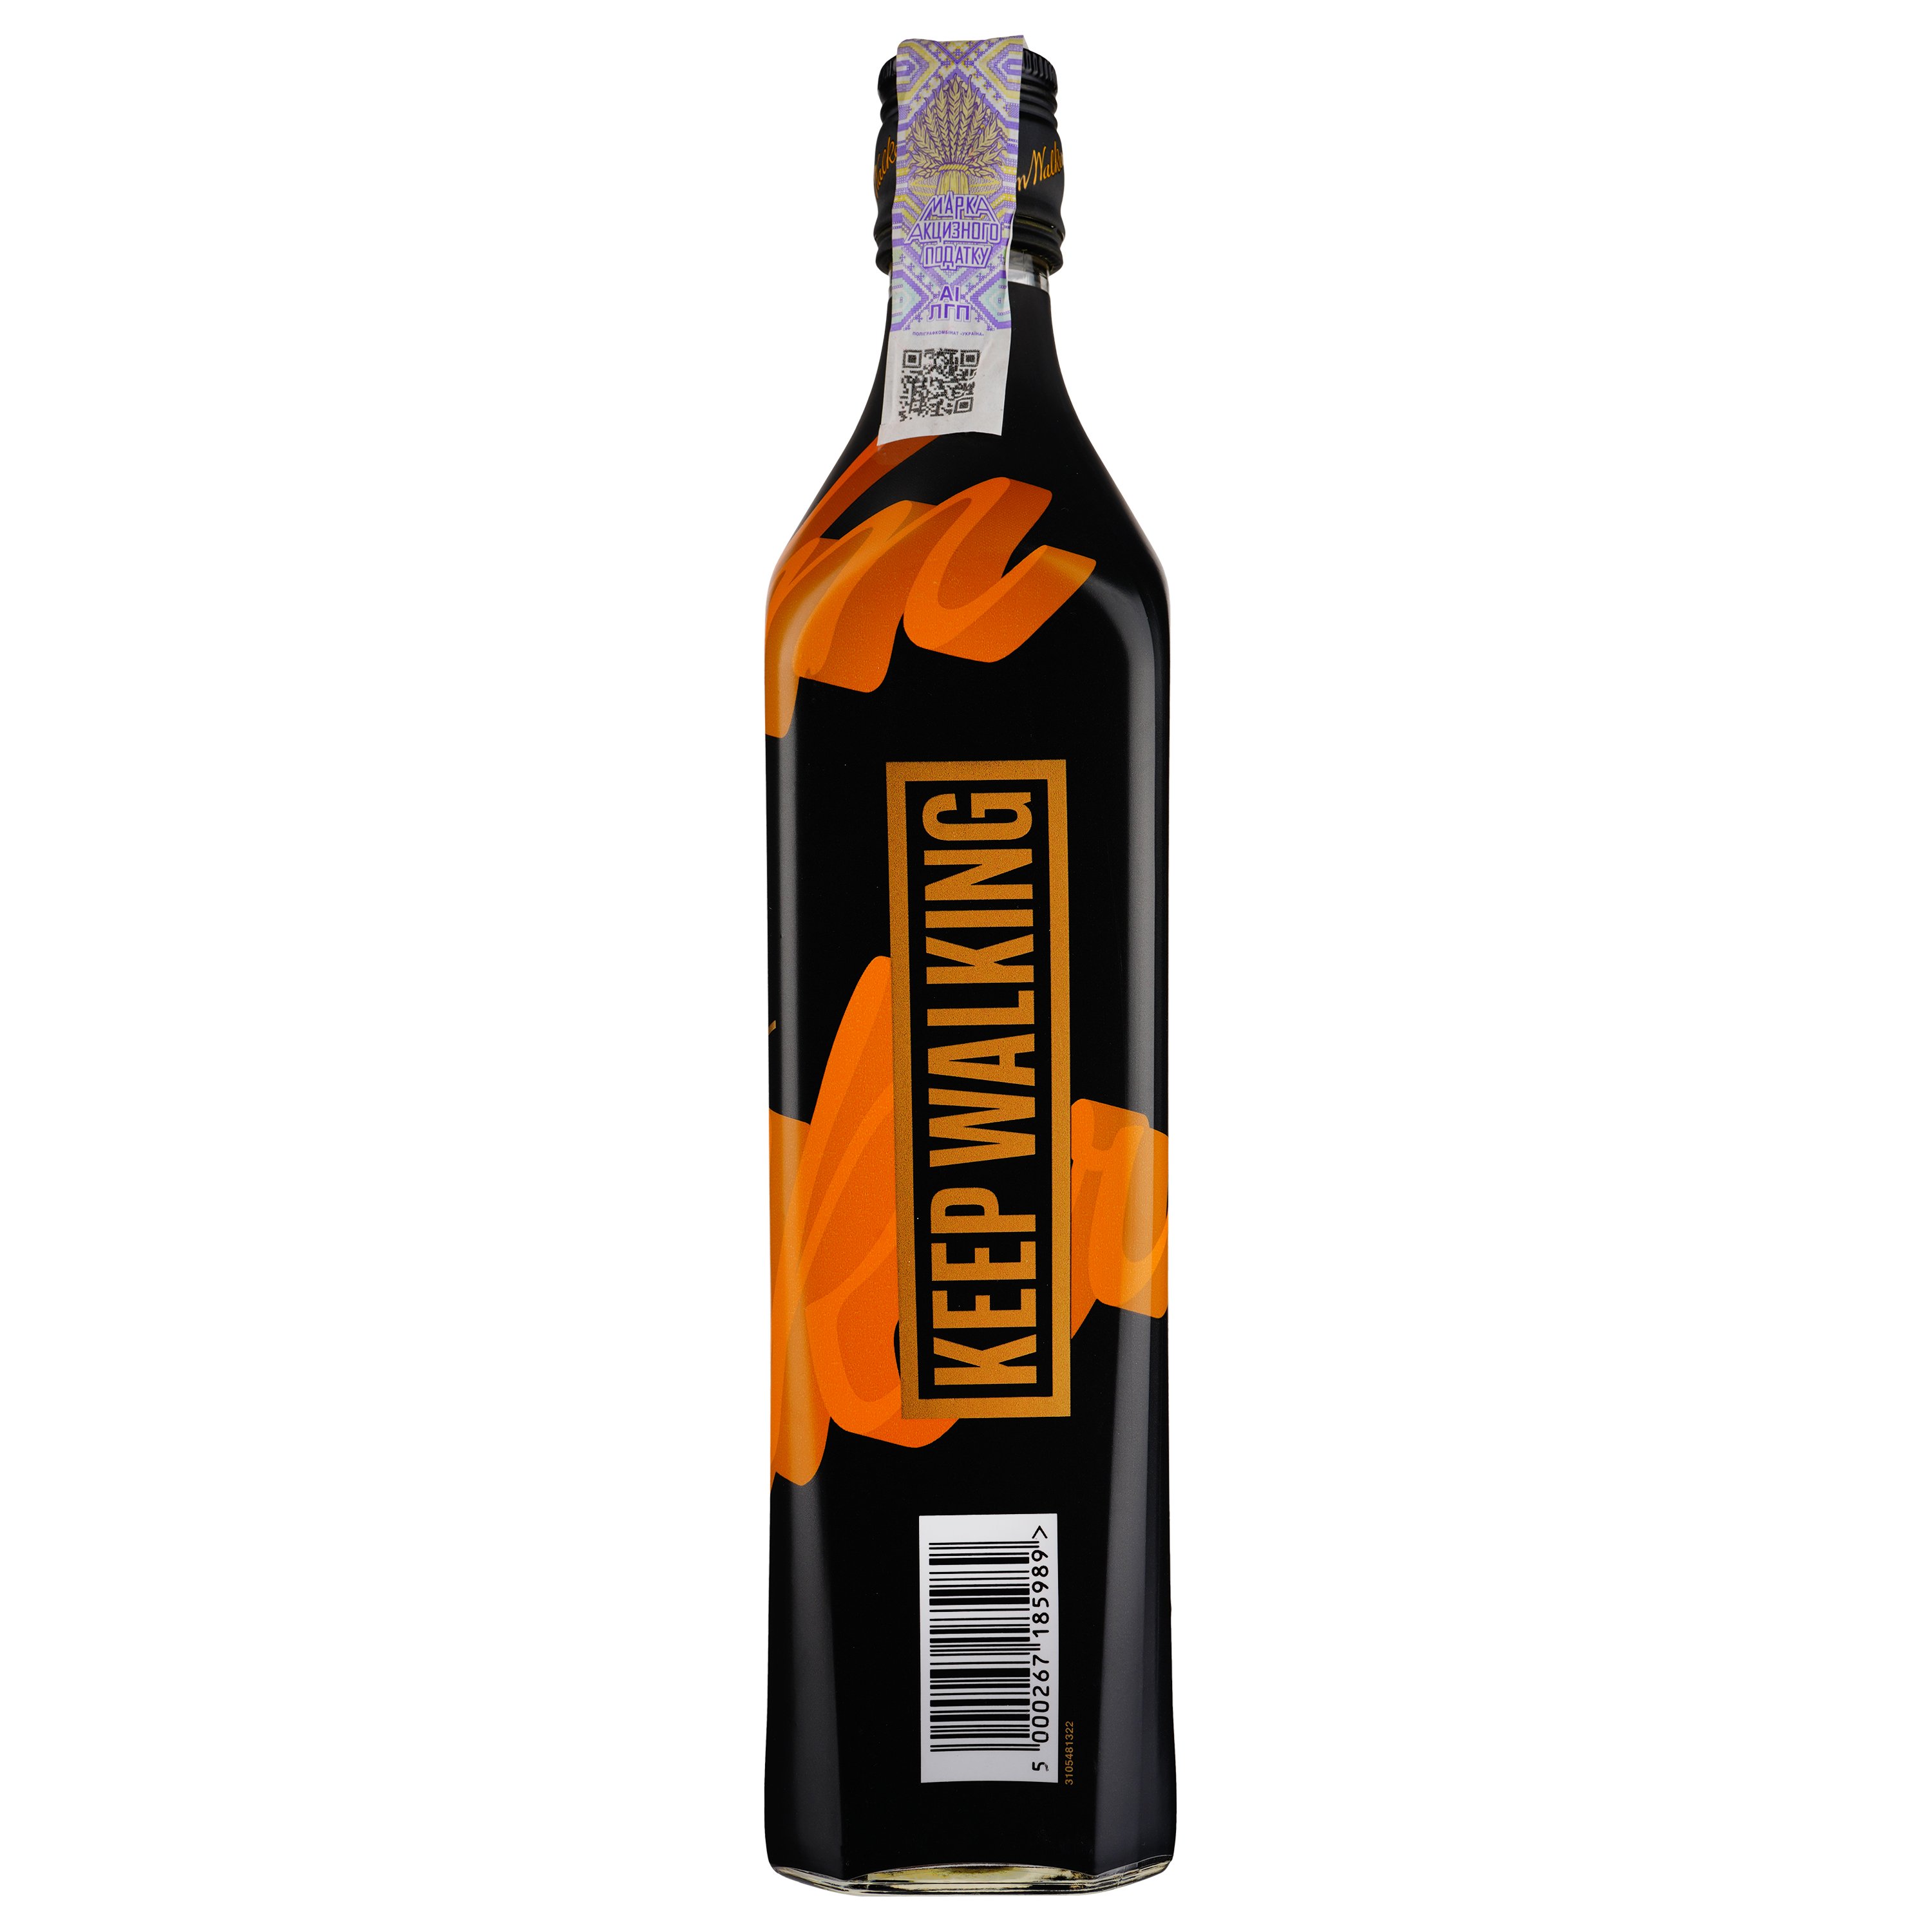 Віскі Johnnie Walker Black label Icon Blended Scotch Whisky, 40%, 0,7 л - фото 3